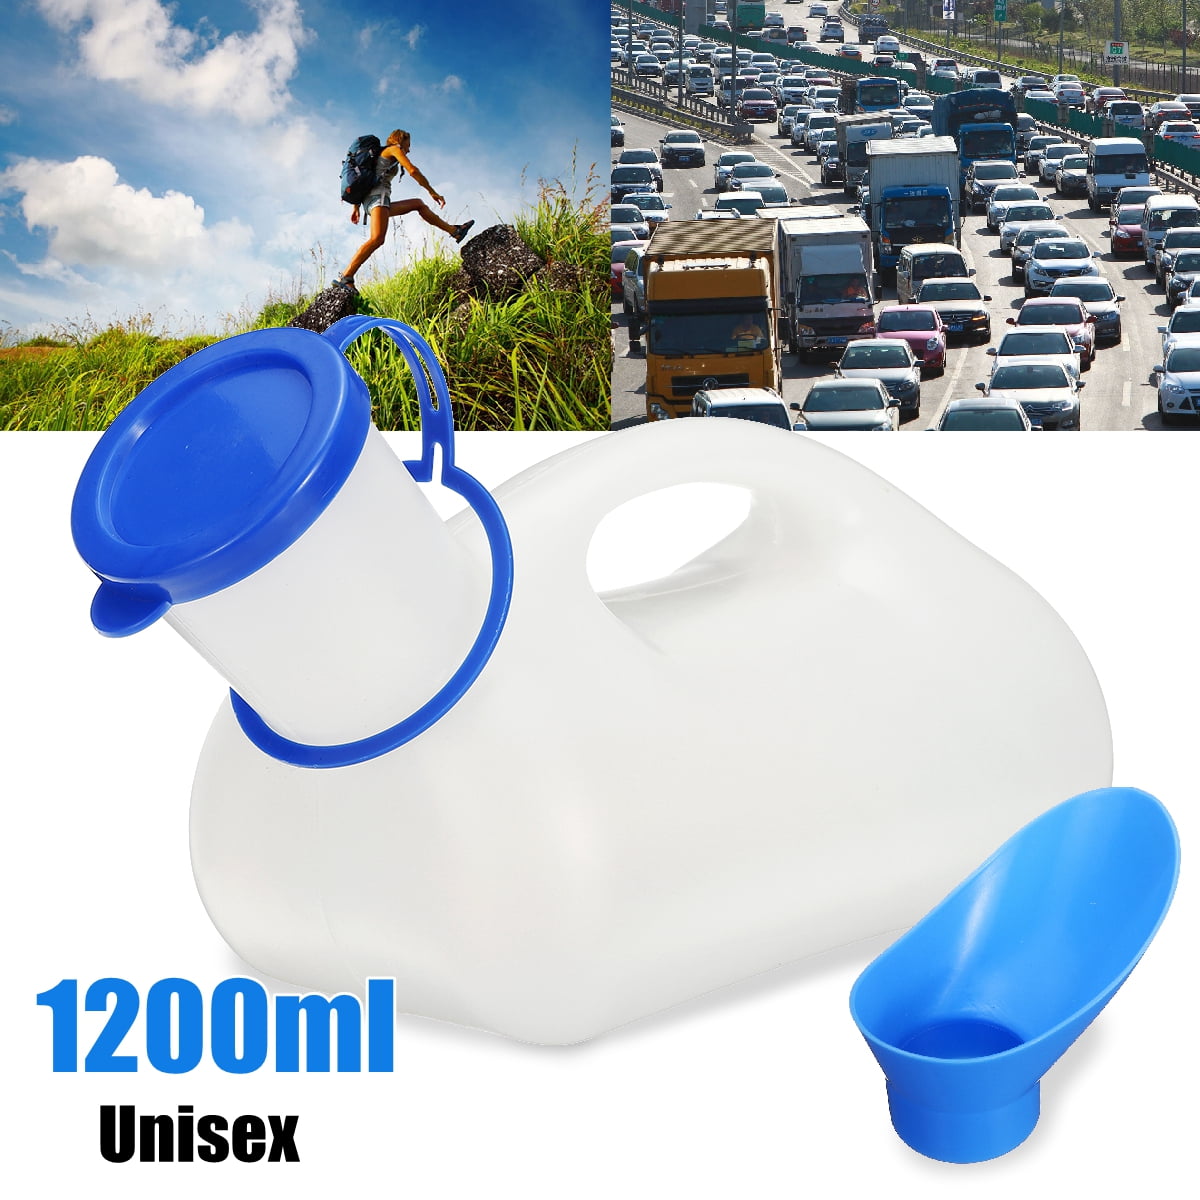 Unisex REUSABLE Portable Camping Car Travel Pee Urinal Urine Toilet Training JL 